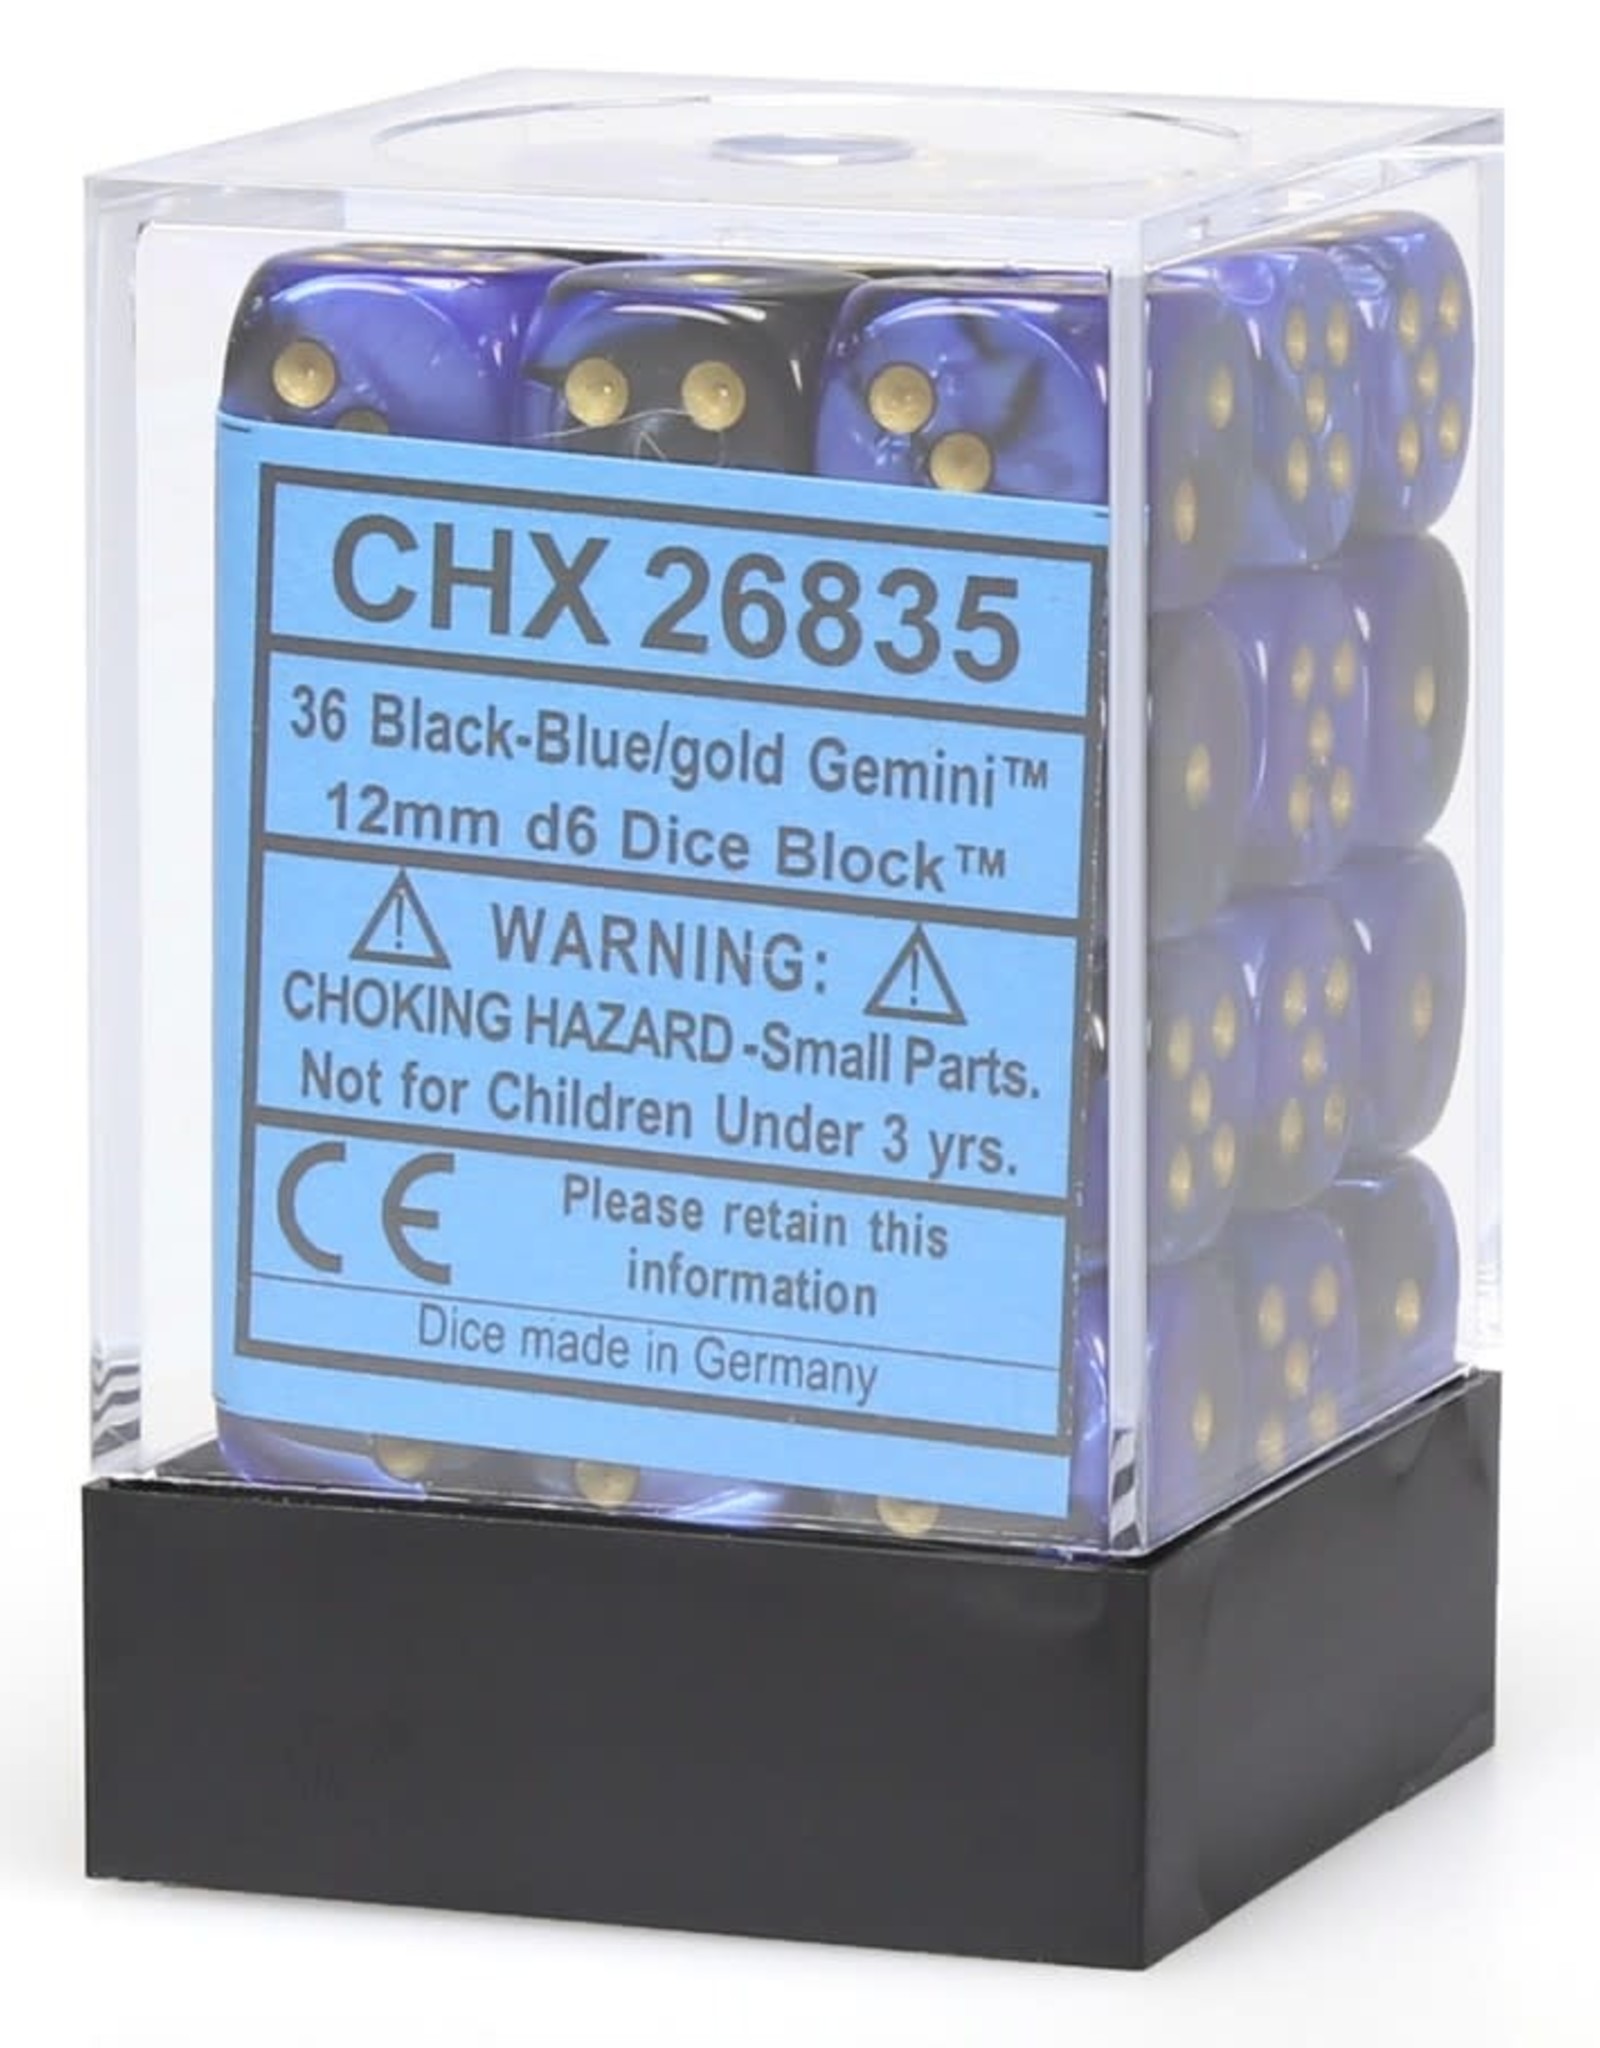 Chessex CHX Gemini Dice: Black-Blue/Gold 12mm d6 Block (36ct) 26835